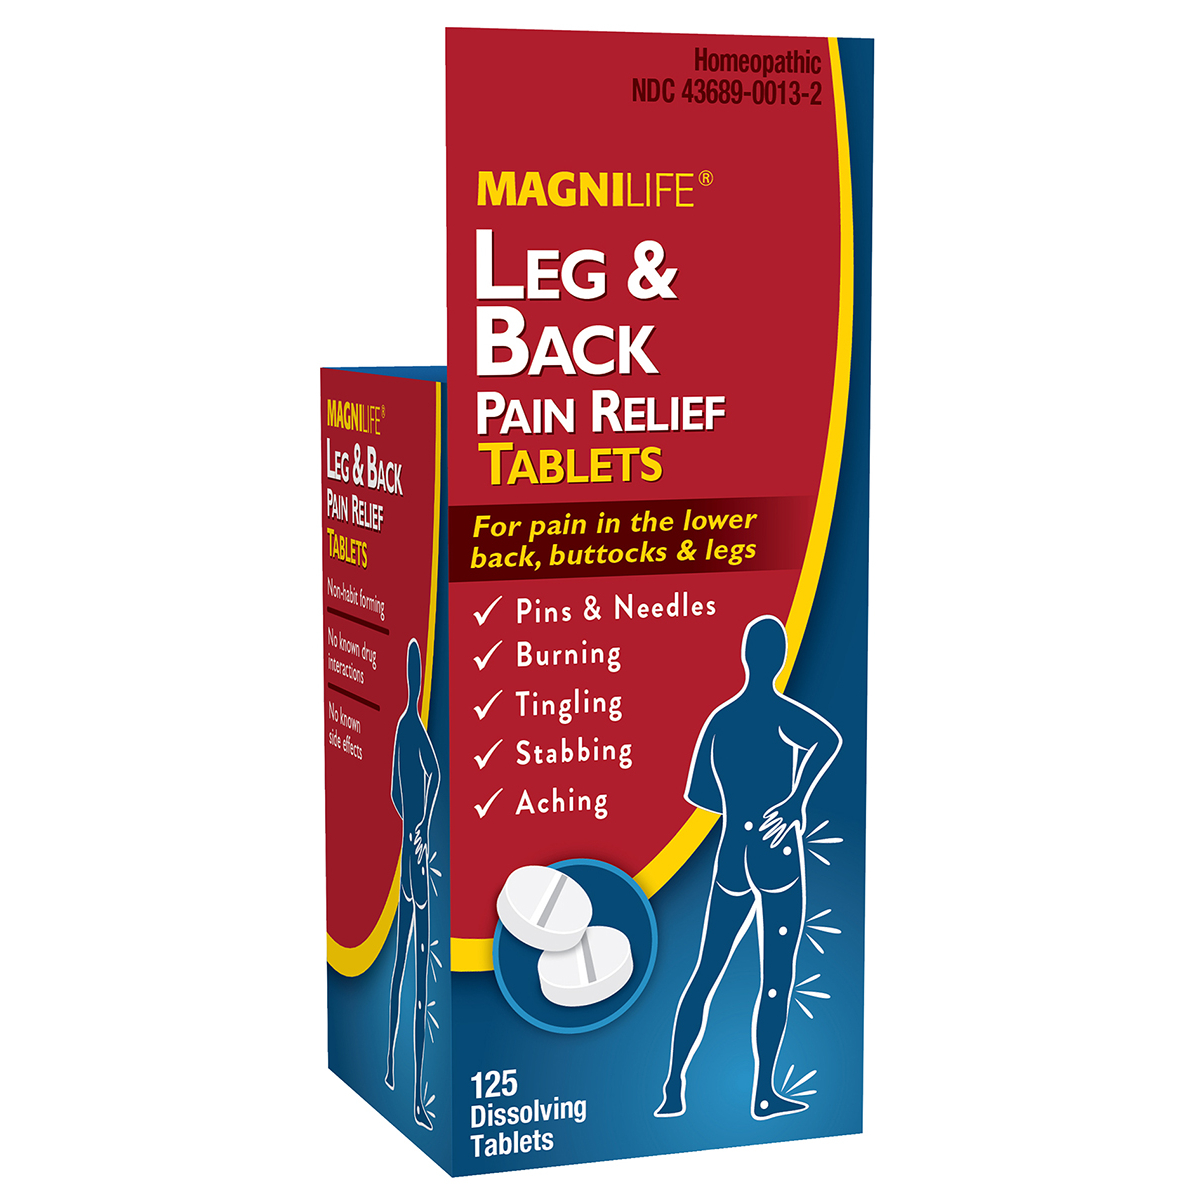 LEG & BACK PAIN RELIEF TABLETS